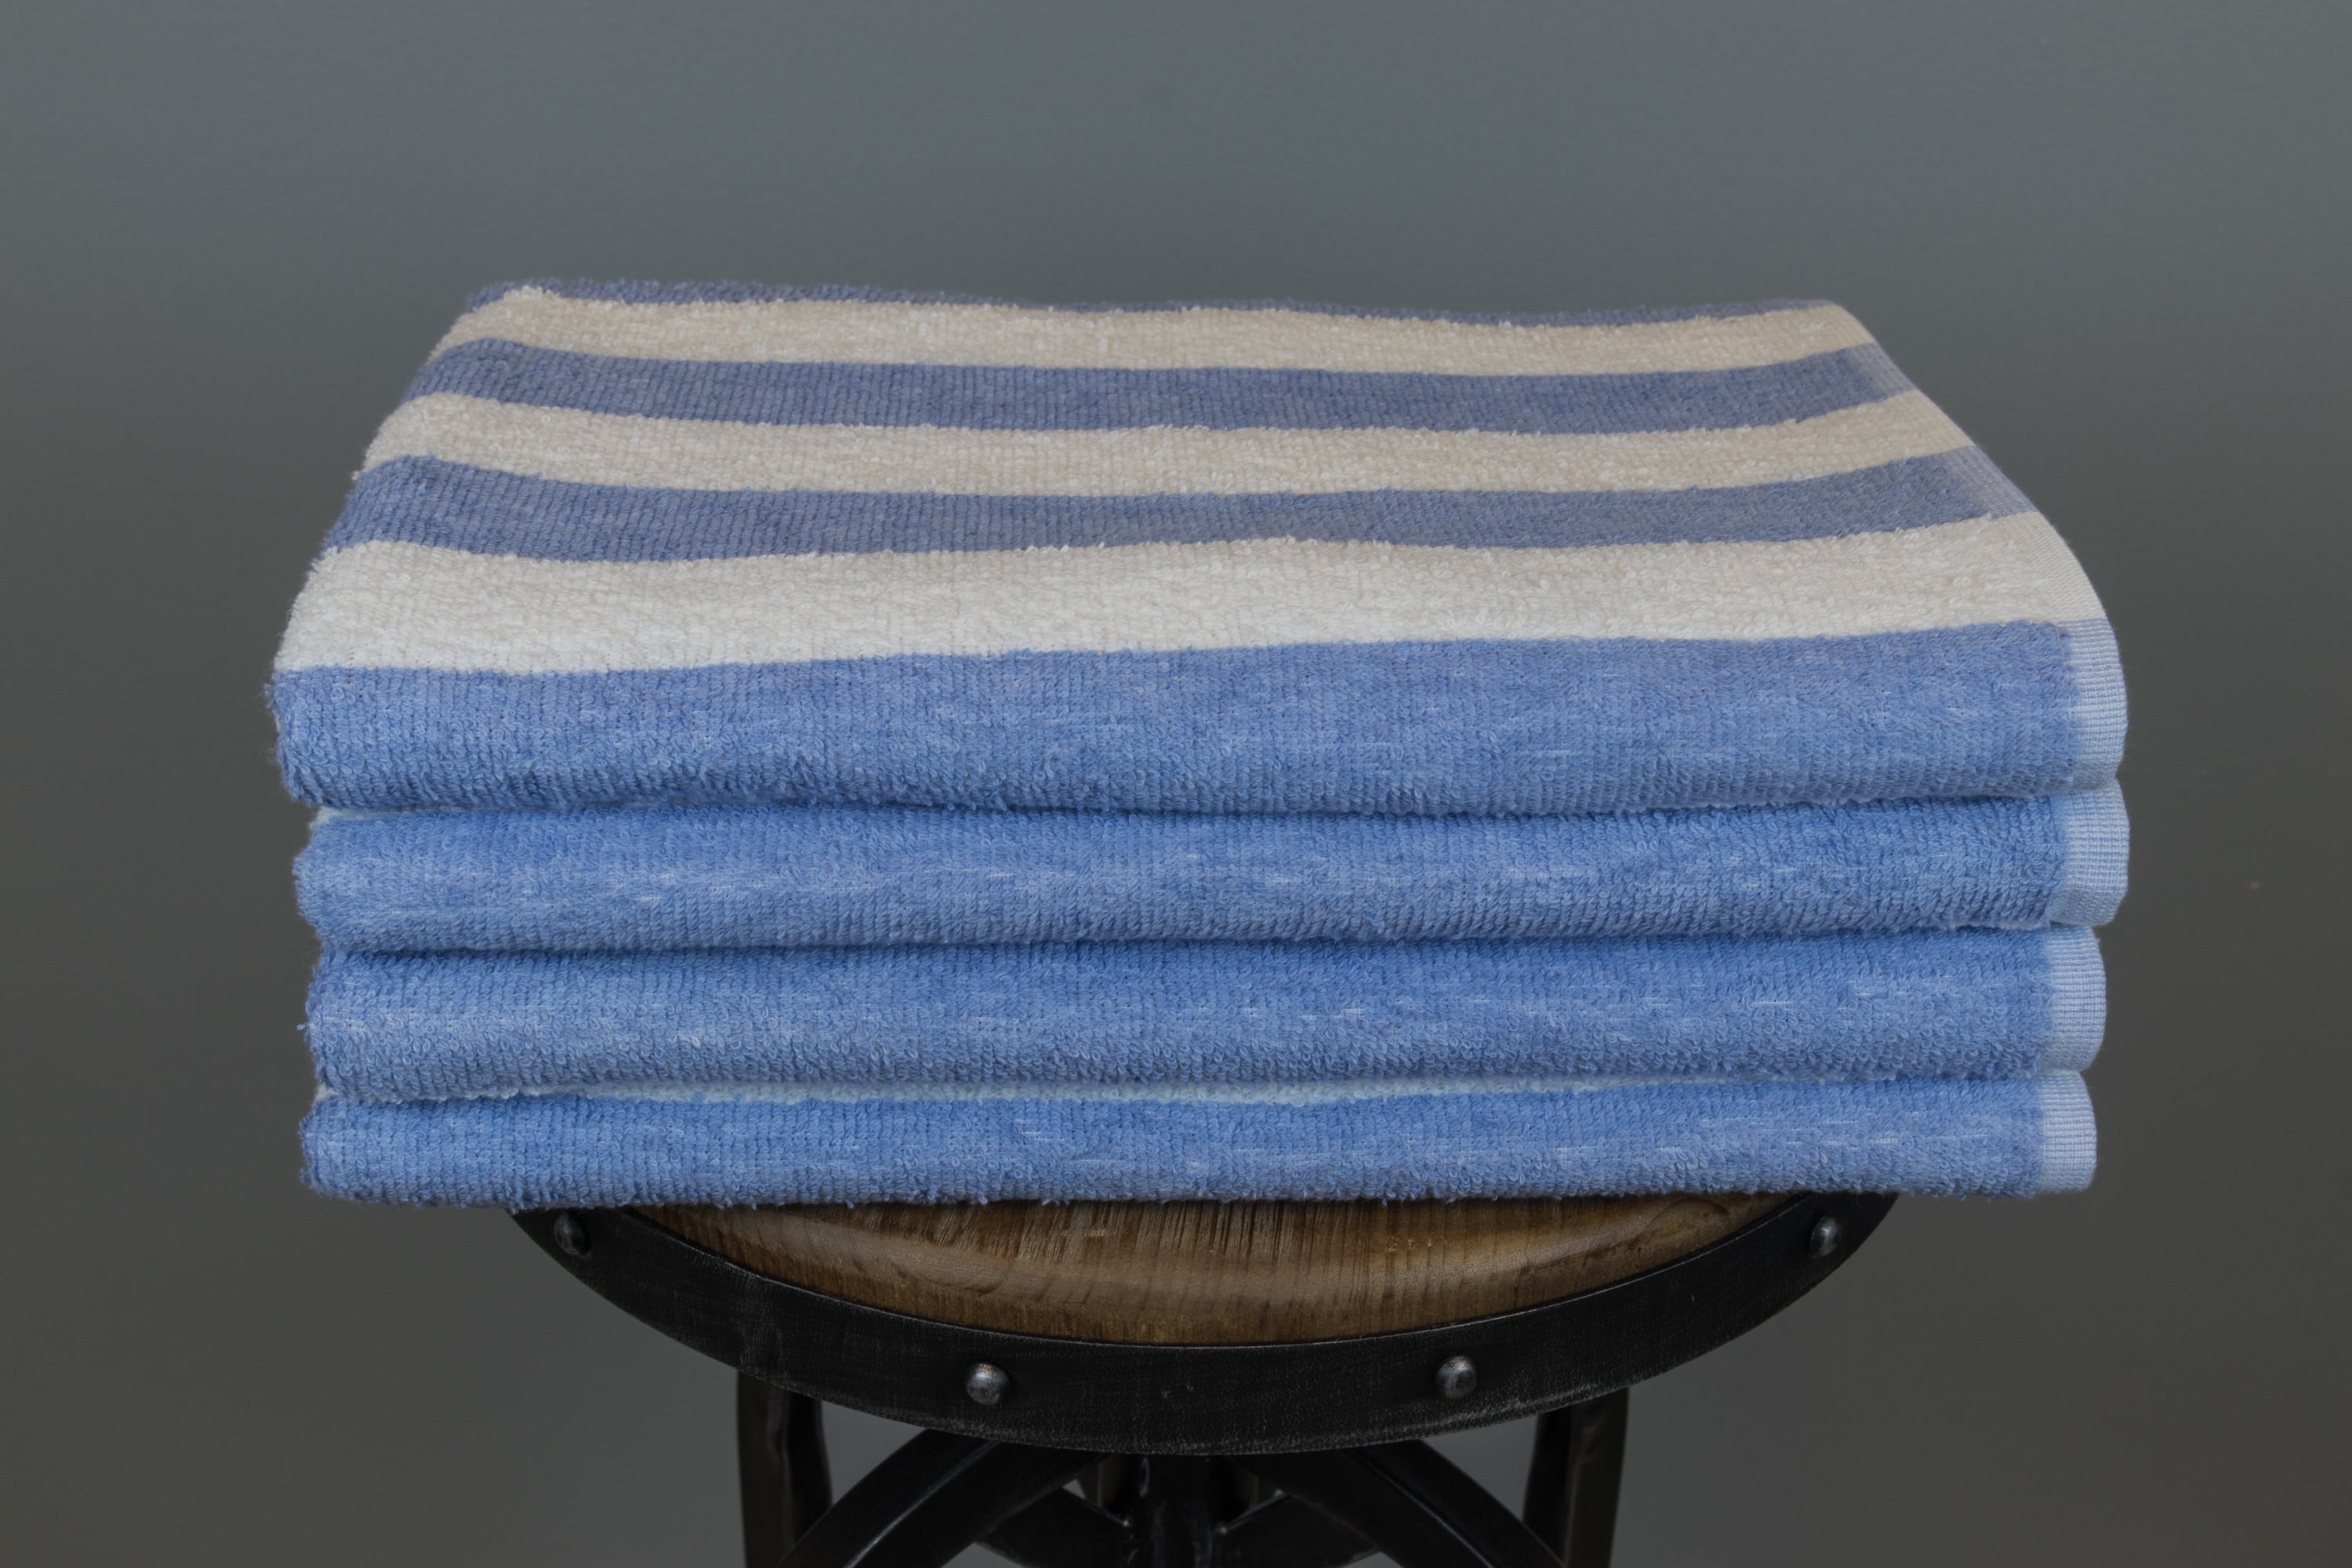 Soft Victorian Stripe Towel 550-Gm Teal Stripe Cotton Towel Set for Bathroom 